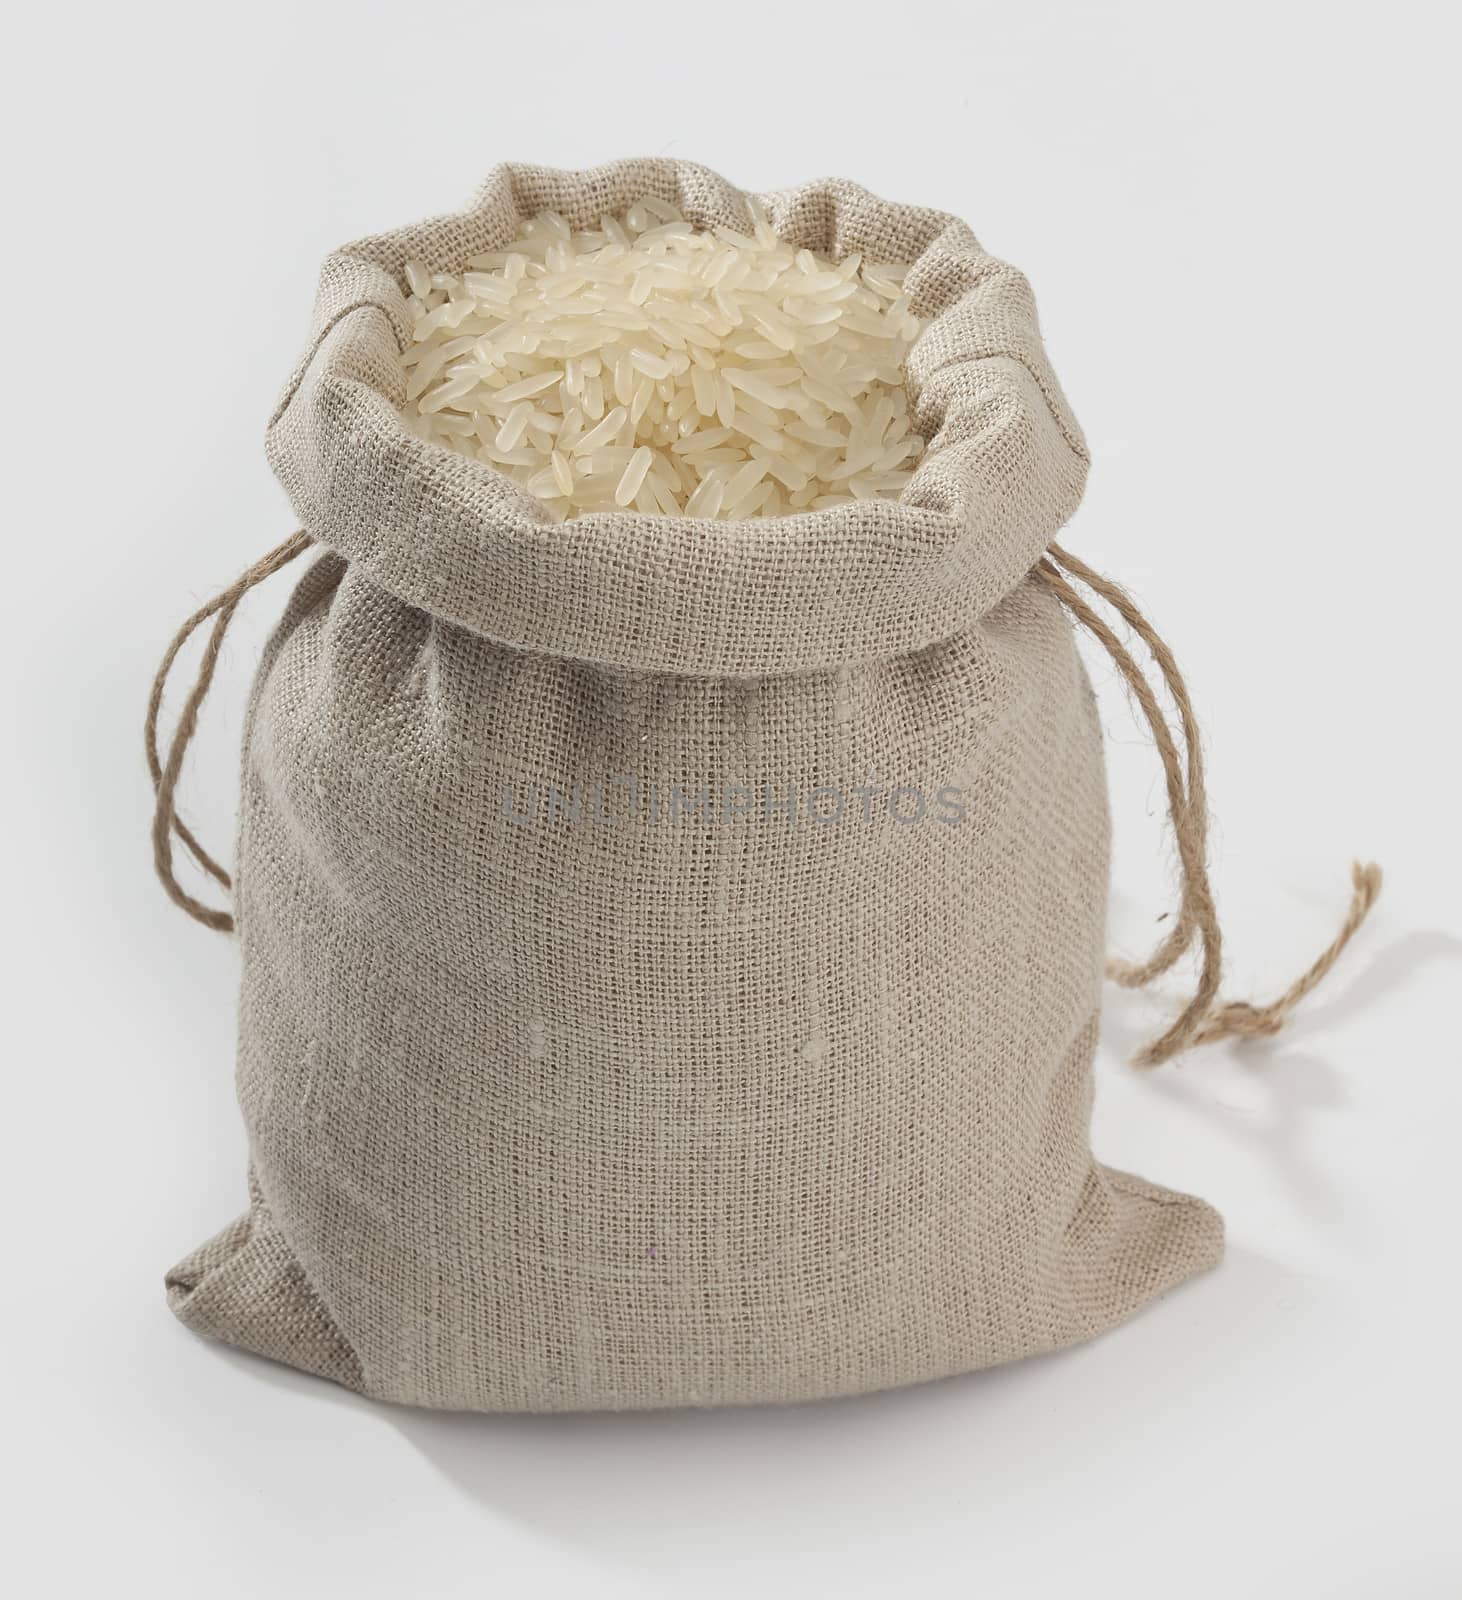 Sack with rice by Angorius